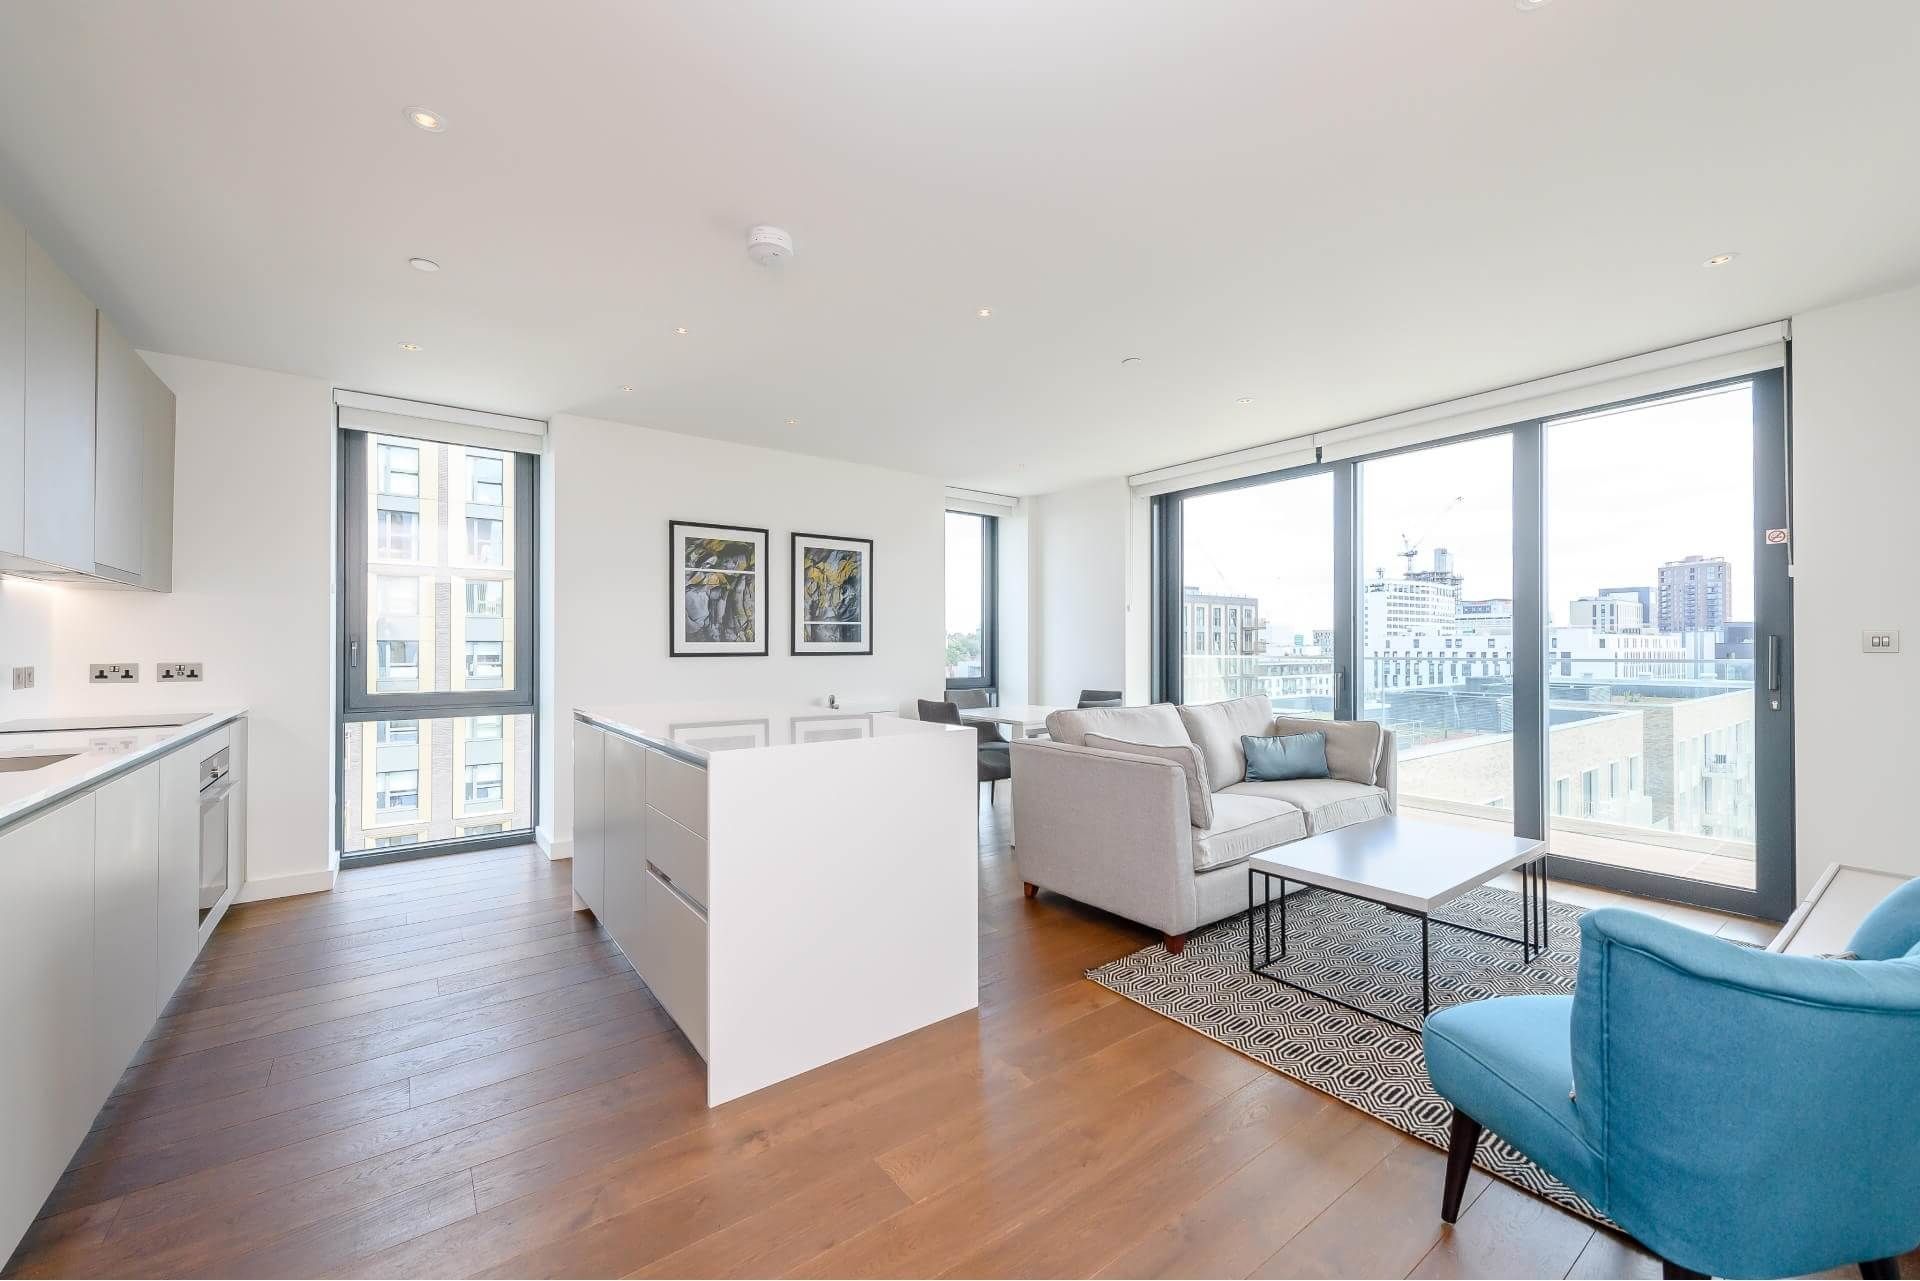 Alto's ultra-modern flats, studios and 1, 2, 3 bed apartments in Wembley are available now for long term lettings. غرفة معيشة أنيقة داخل شقة في لندن، مع تصميم عصري وإضاءة طبيعية وإطلالة رائعة على المدينة.